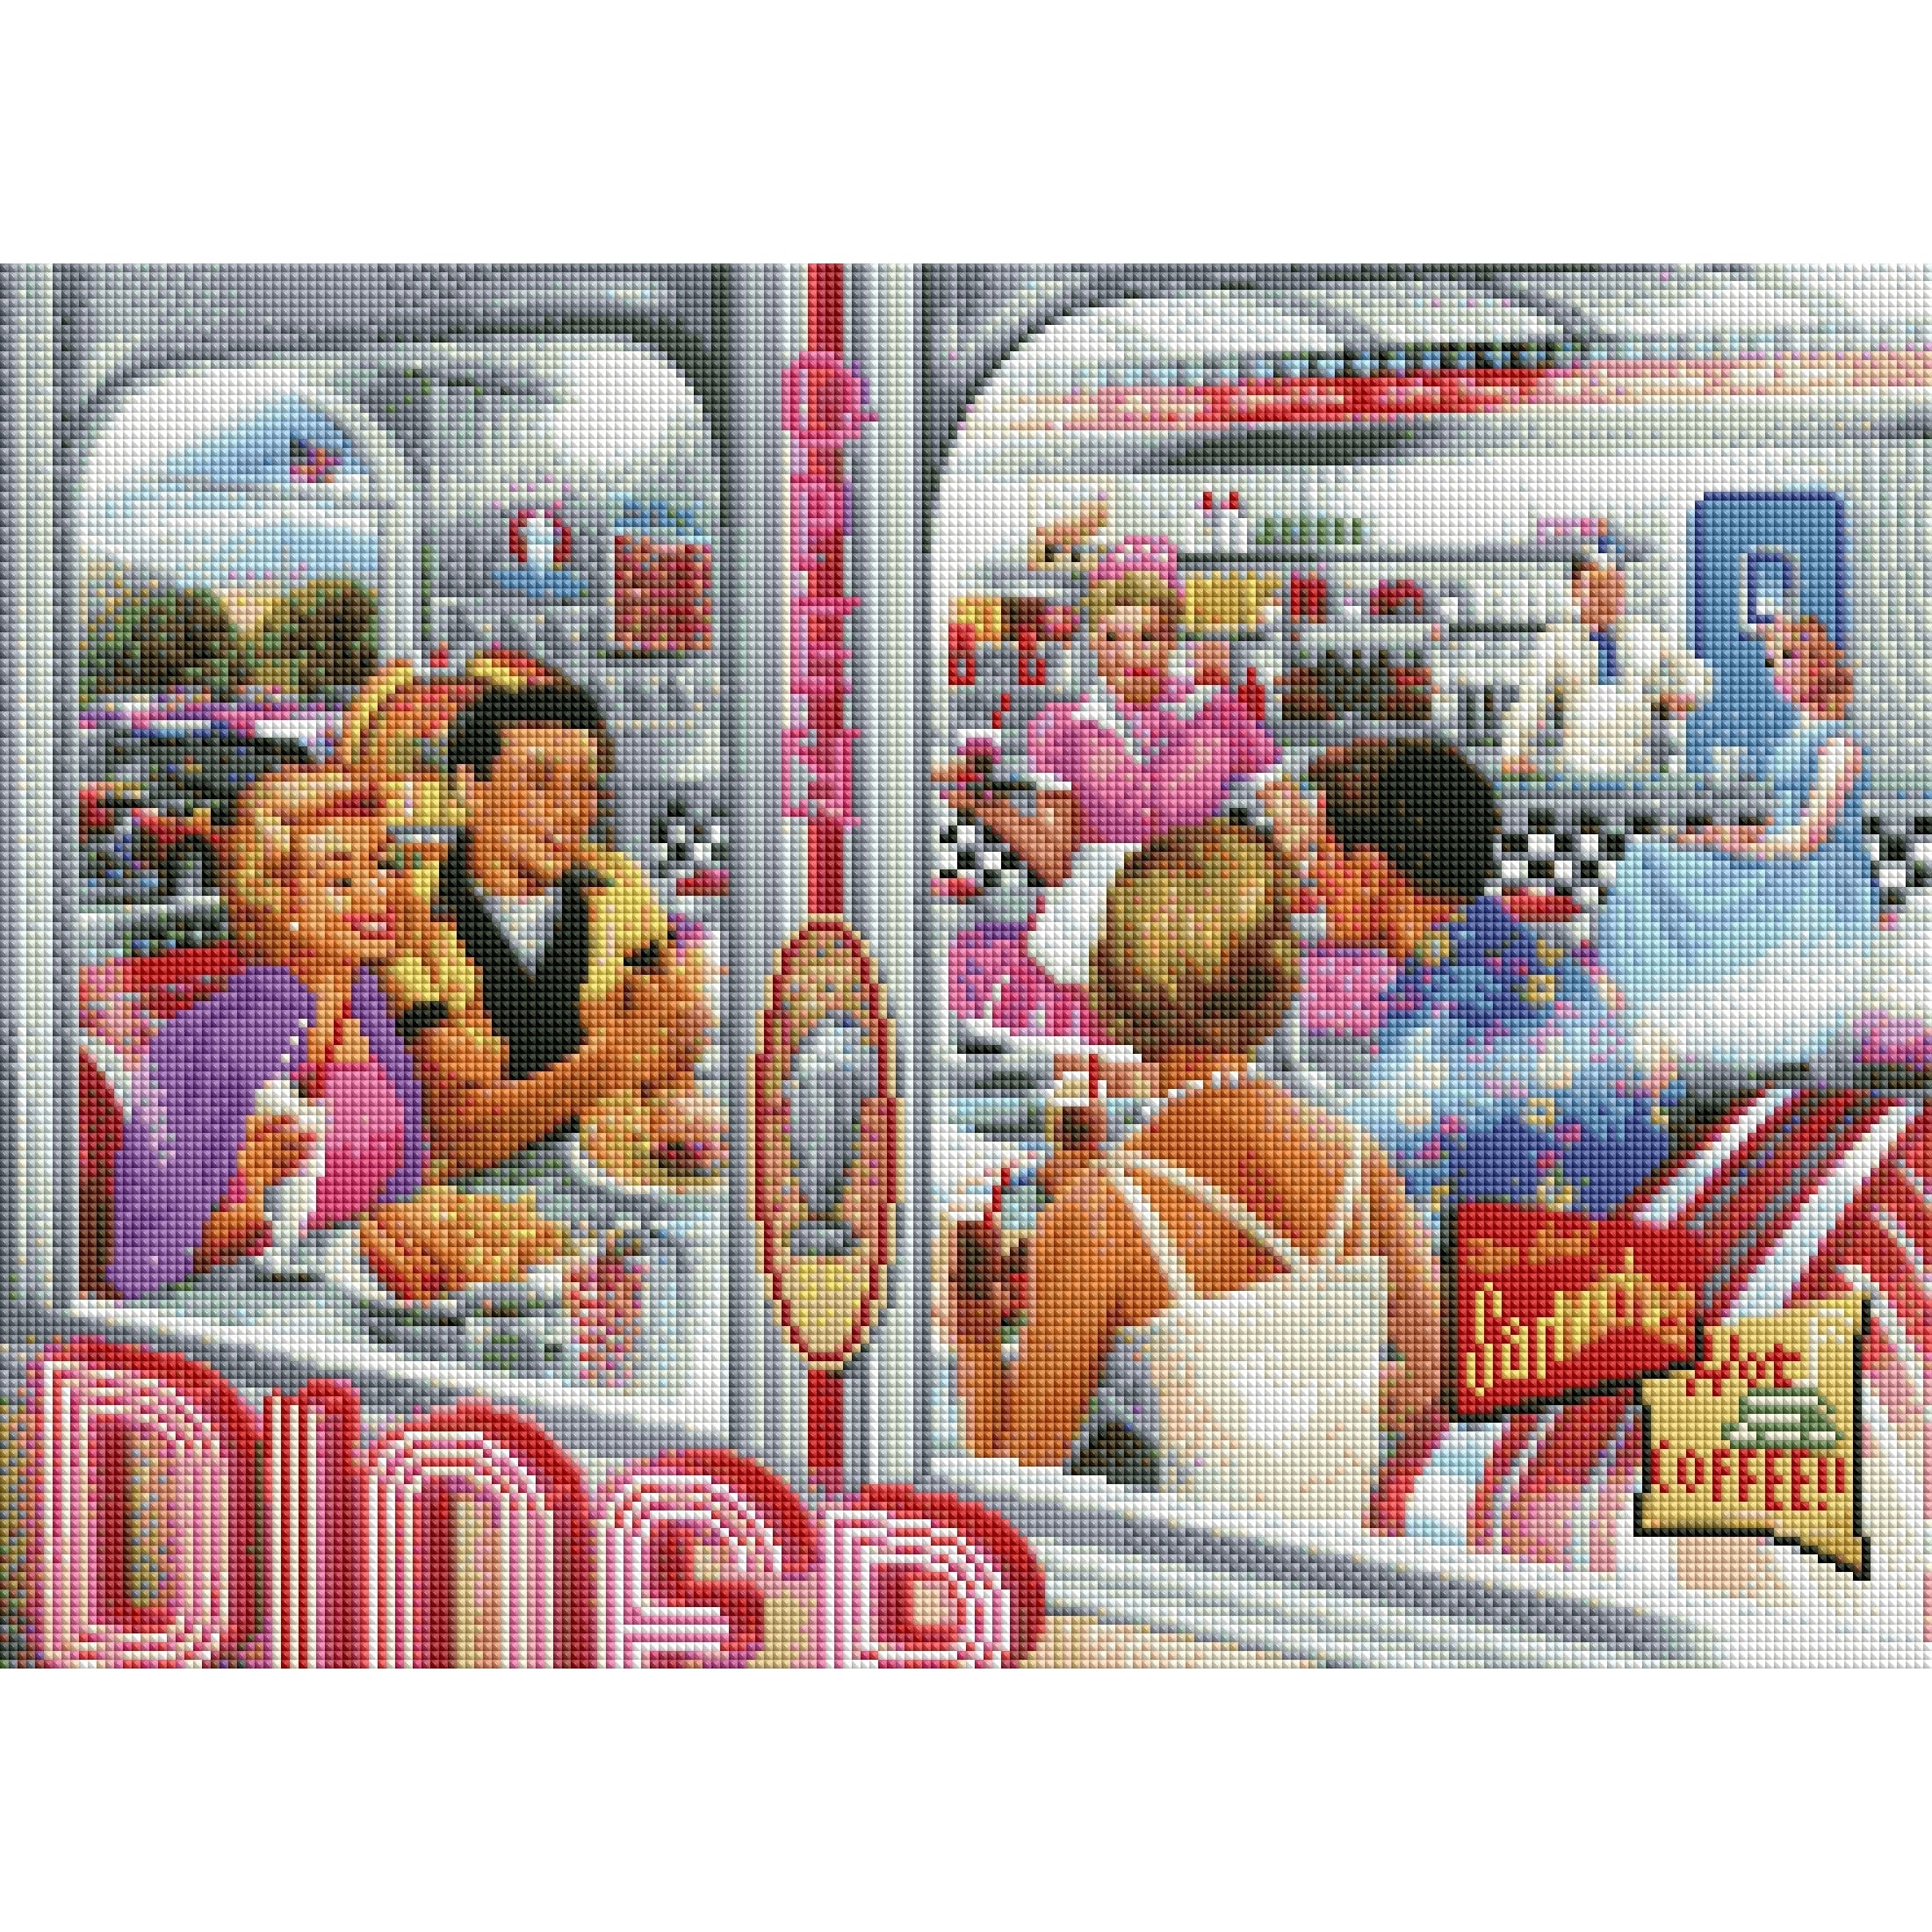 Diner Double Date by Bigelow Illustrations-45x60cm-Round-DiamondArt.ca